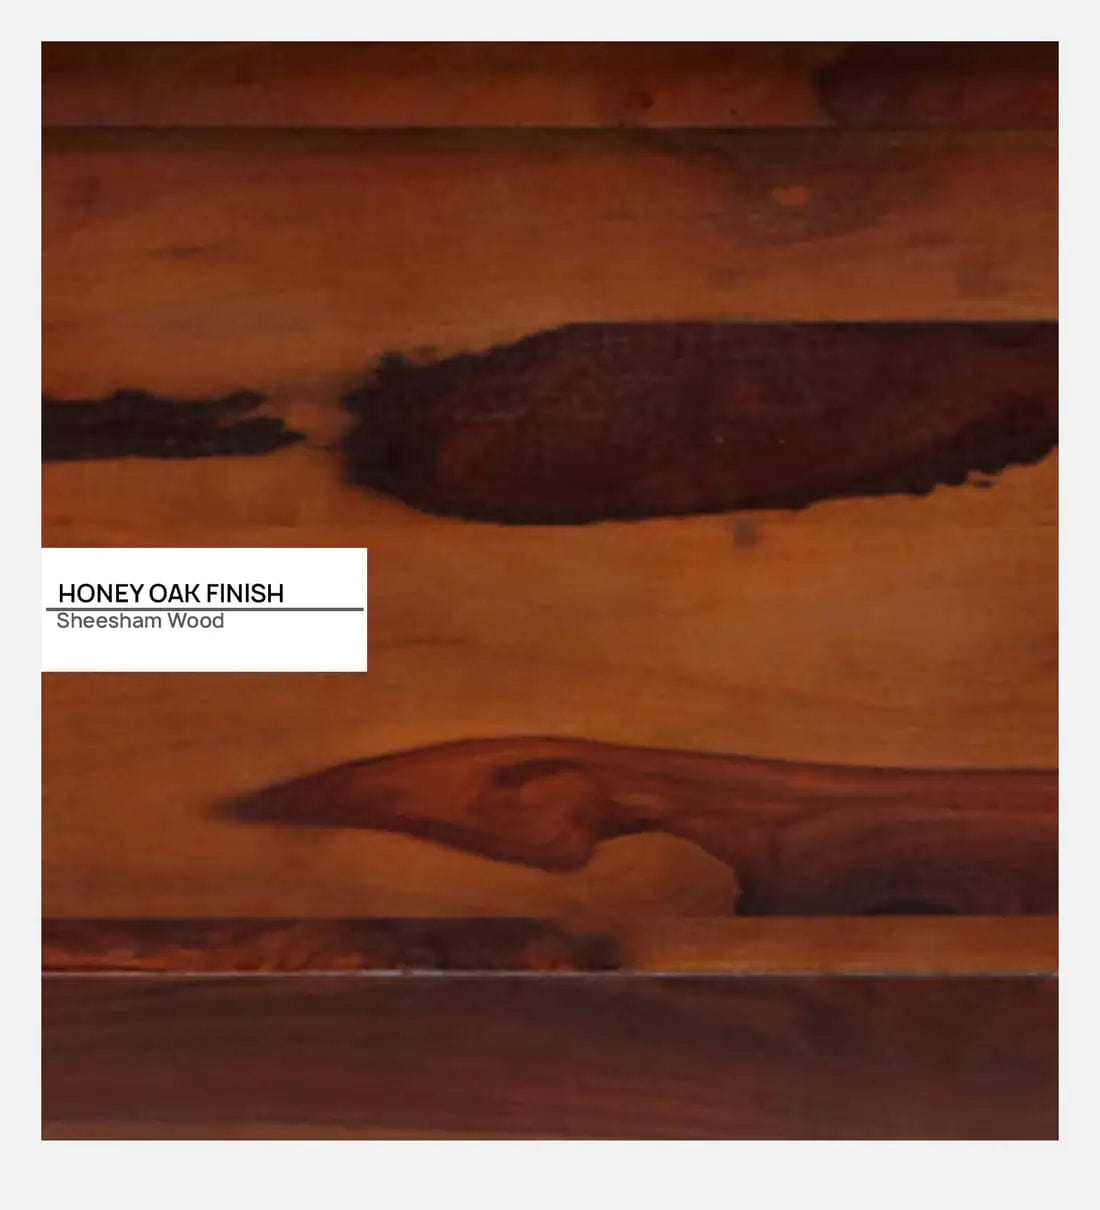 Kelty Sheesham Wood Writing Table In Honey Oak Finish With Drawers,